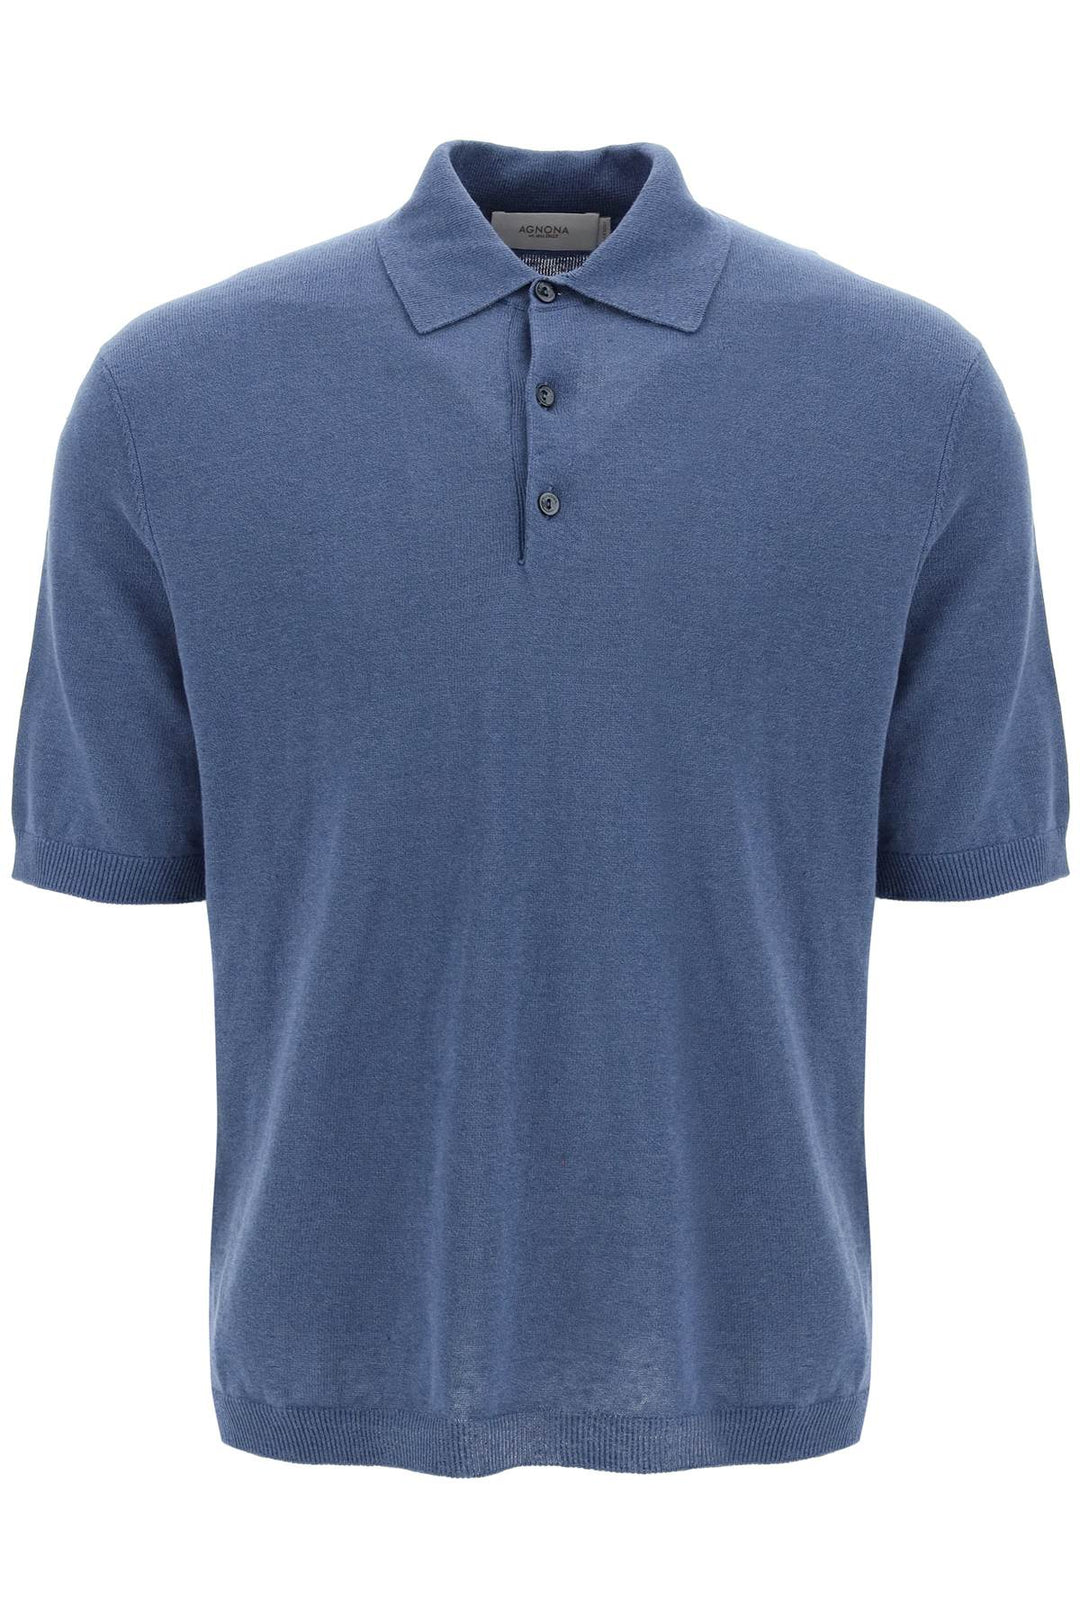 Agnona Linen And Cotton Jersey Polo   Blu